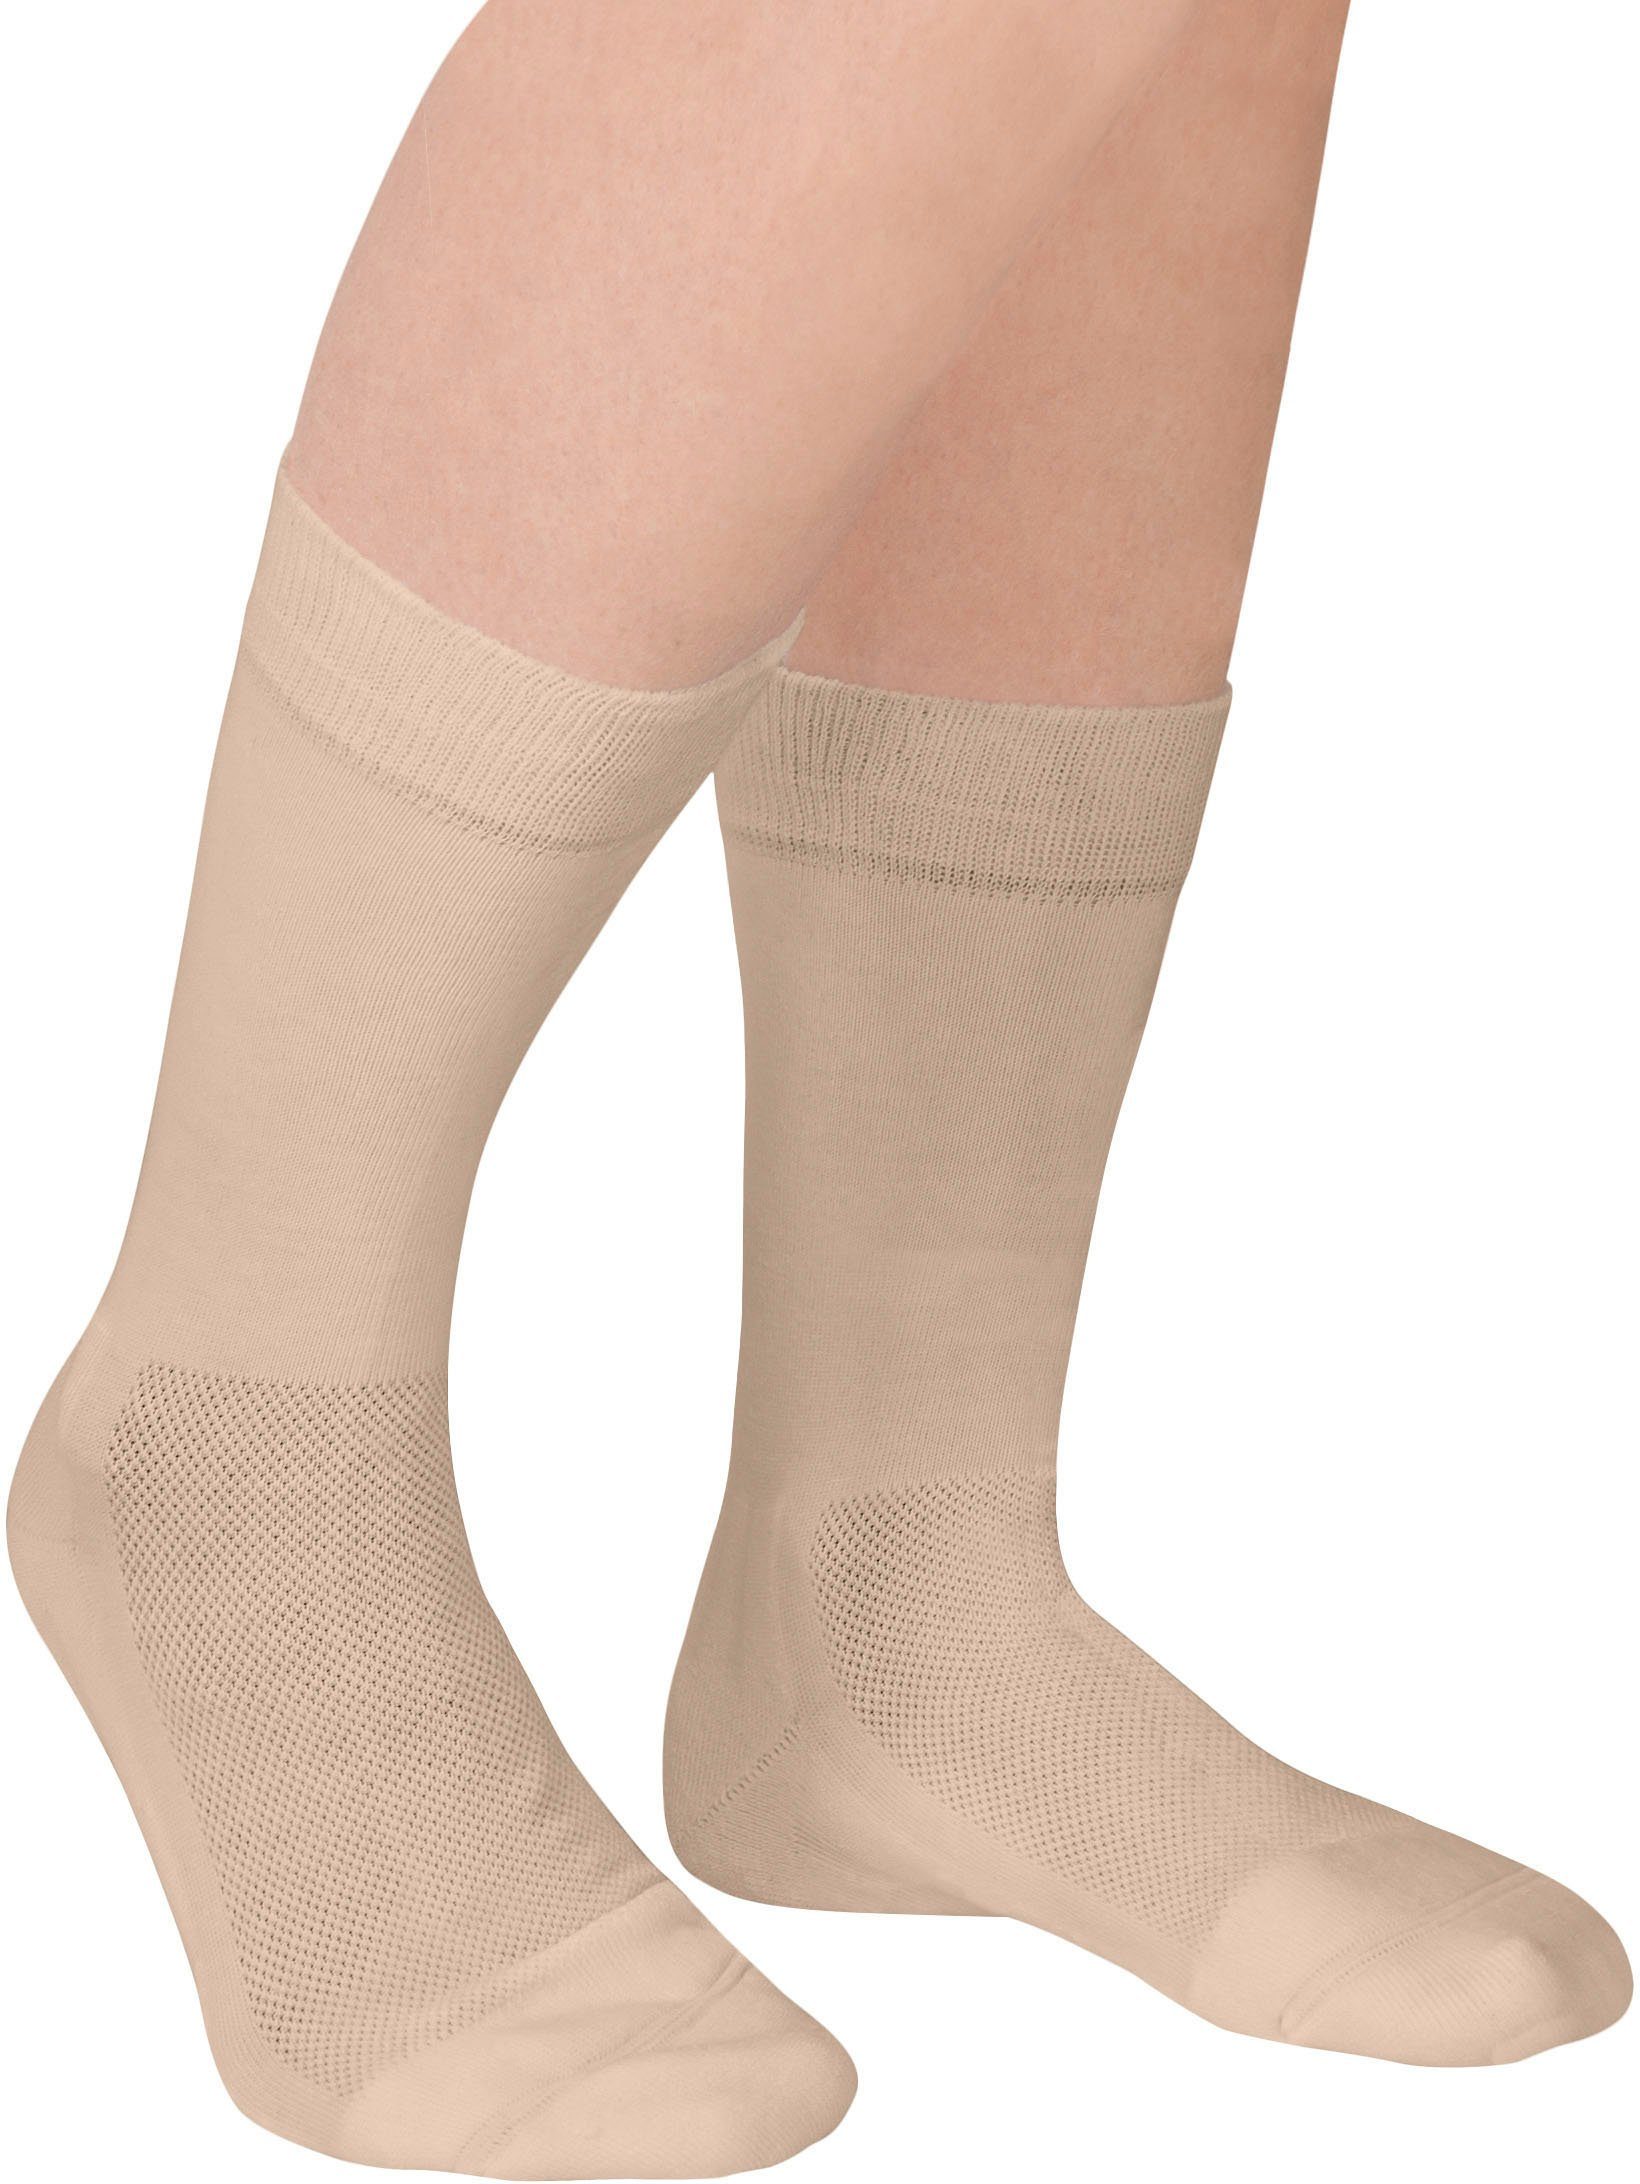 Fußgut Diabetikersocken Venenfeund Sensitiv Socken (2-Paar) beige